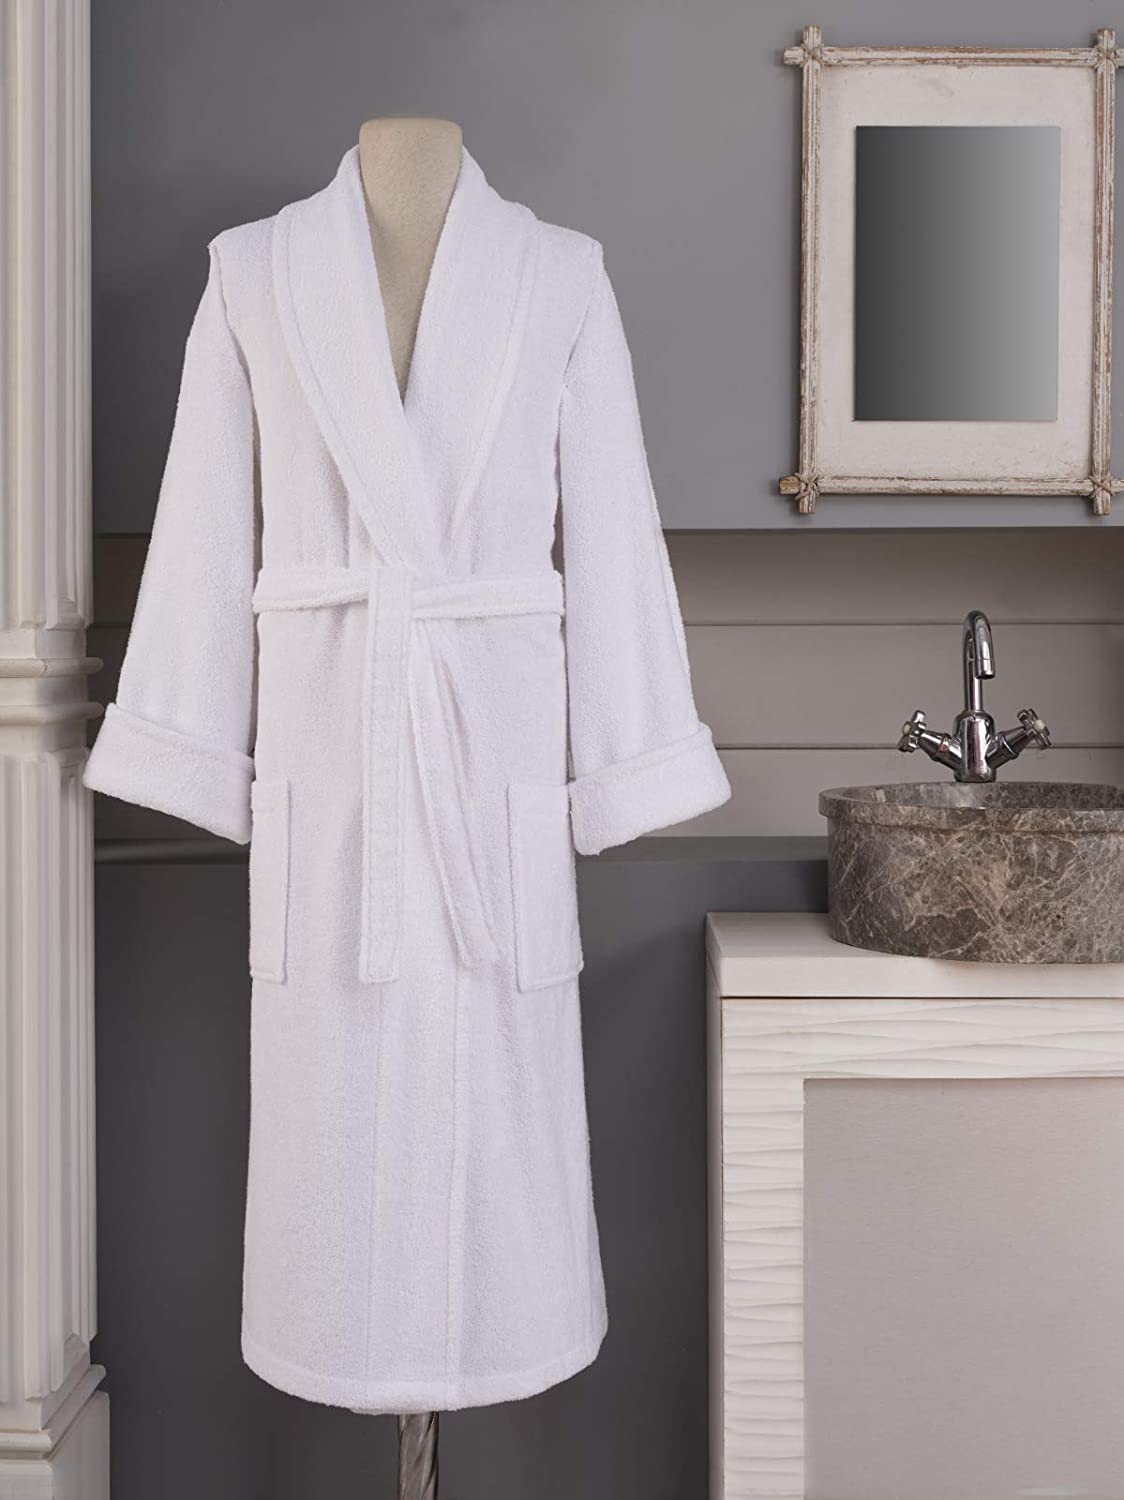 Halley Luxury Bathrobe for Women & Men, Shawl Collar Spa Bath Robes Terry Cotton Ultra Soft Shower Robe with Pockets